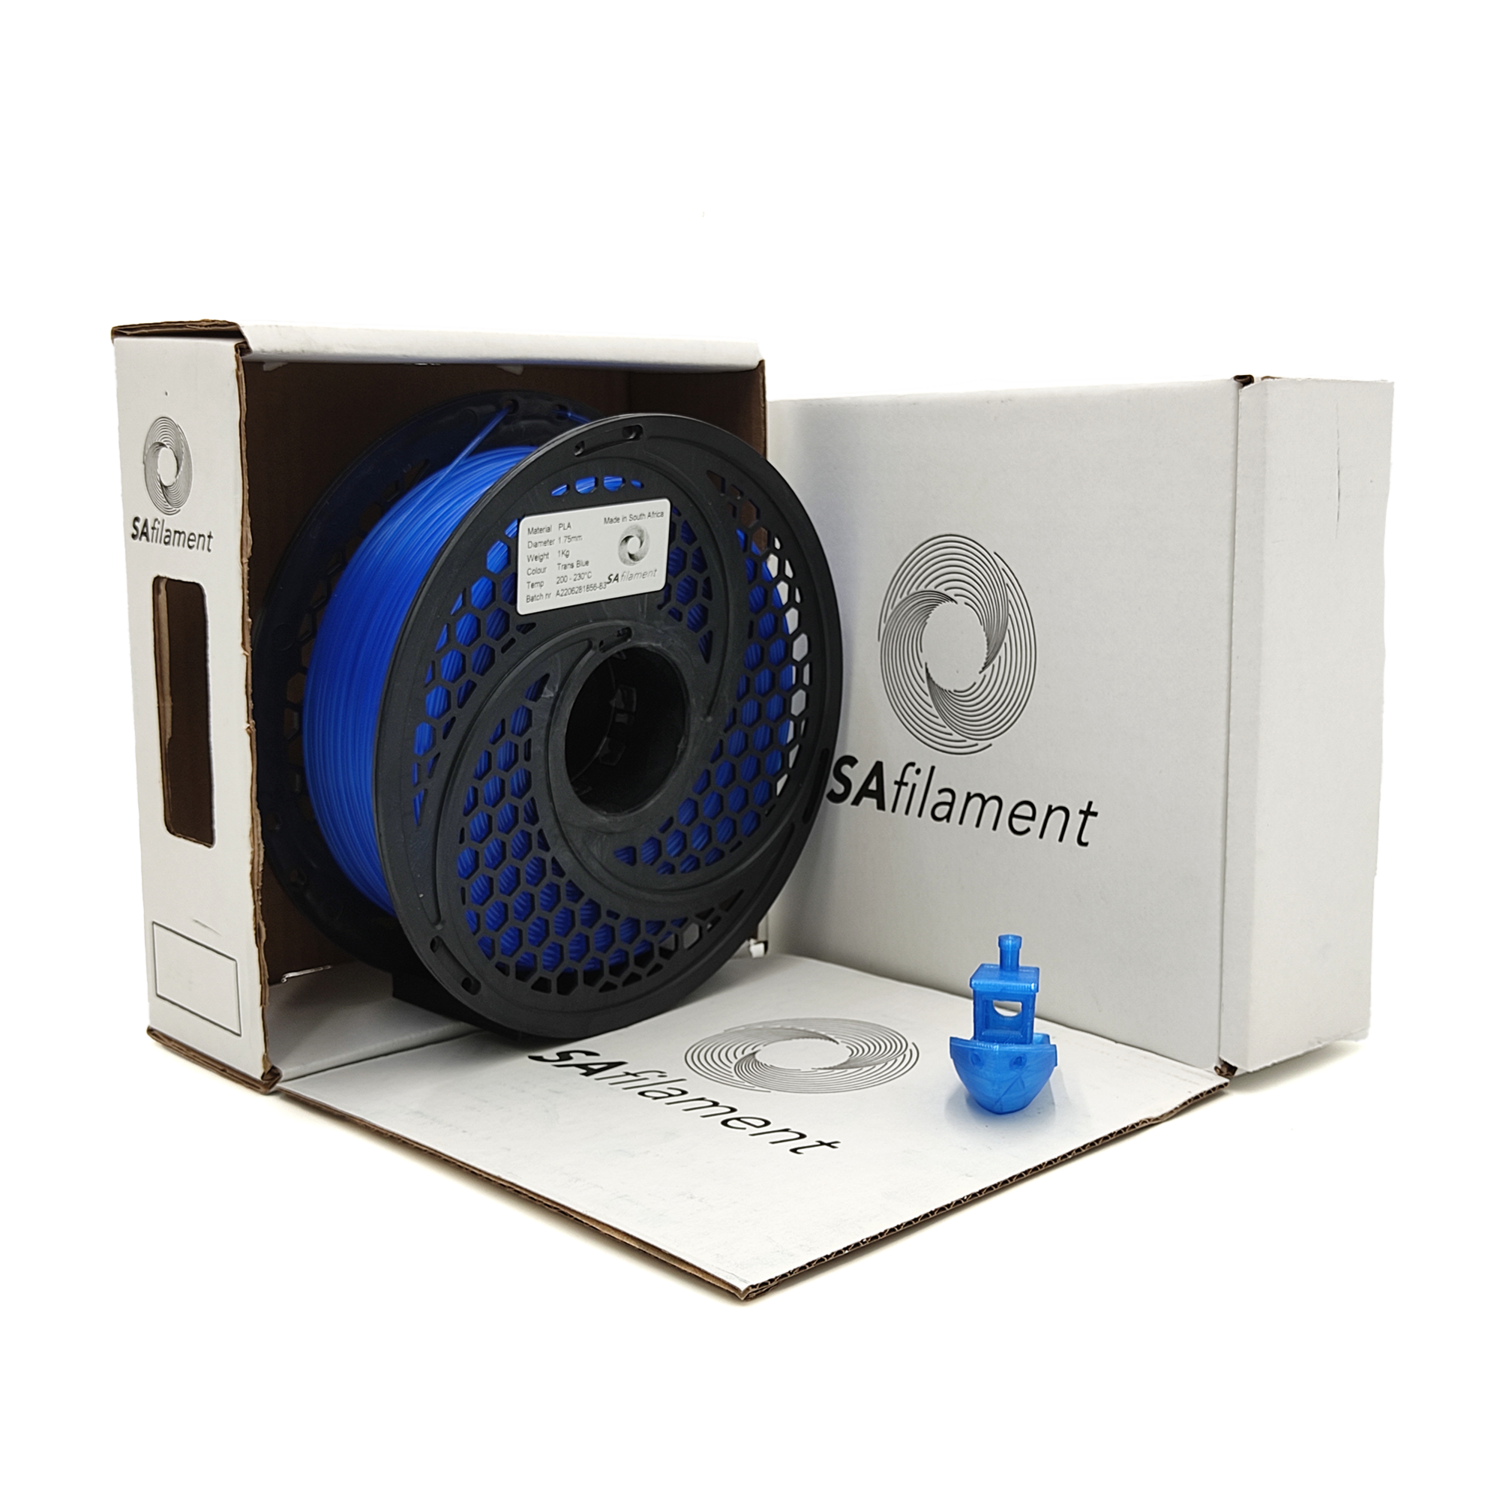 Translucent Blue PLA Filament, 1Kg, 1.75mm by SA Filament